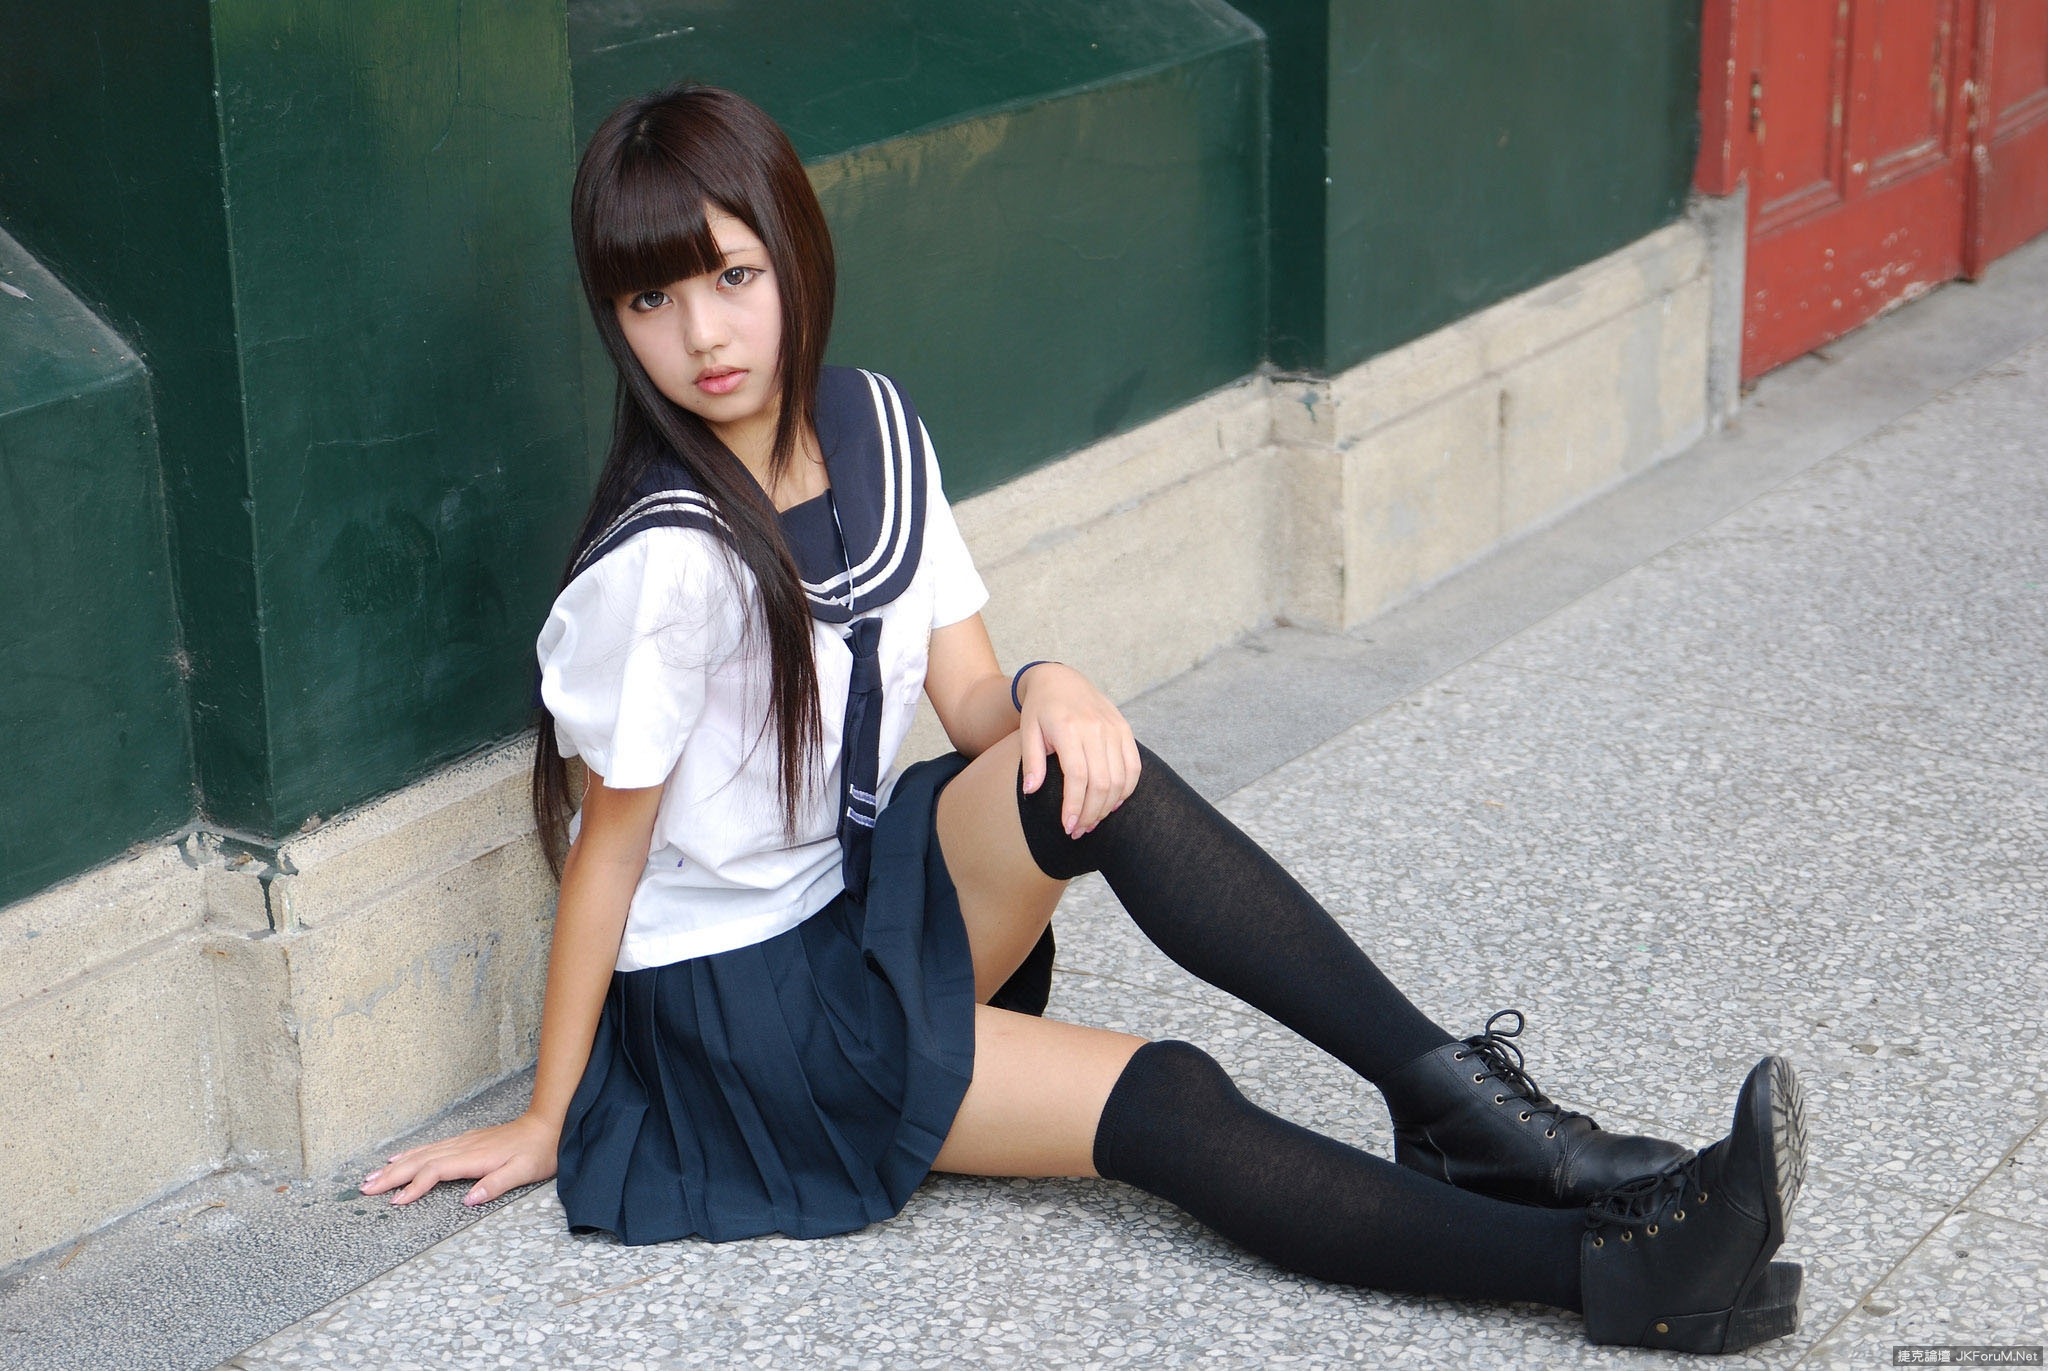 Japanese school 18. Японские девушки школа. Ножки японских девочек из школы.